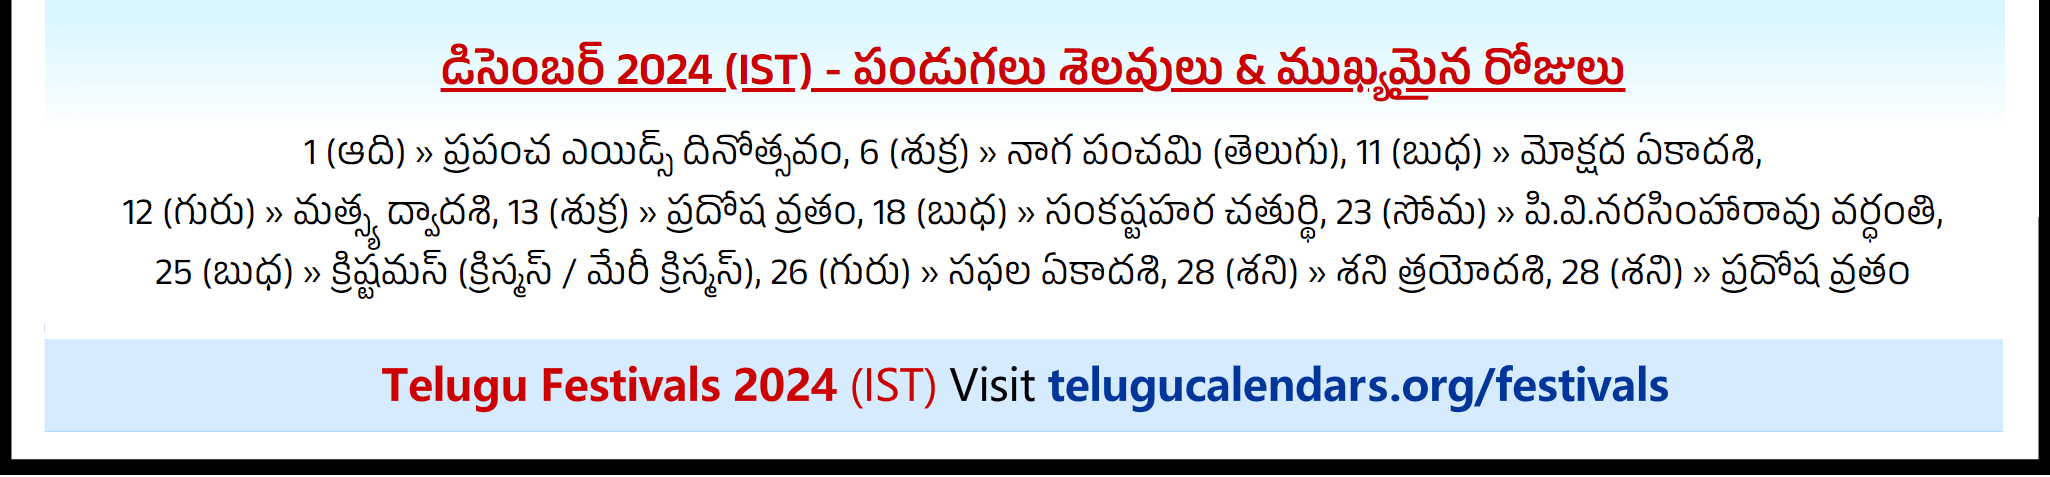 Telugu Festivals 2024 December Toronto